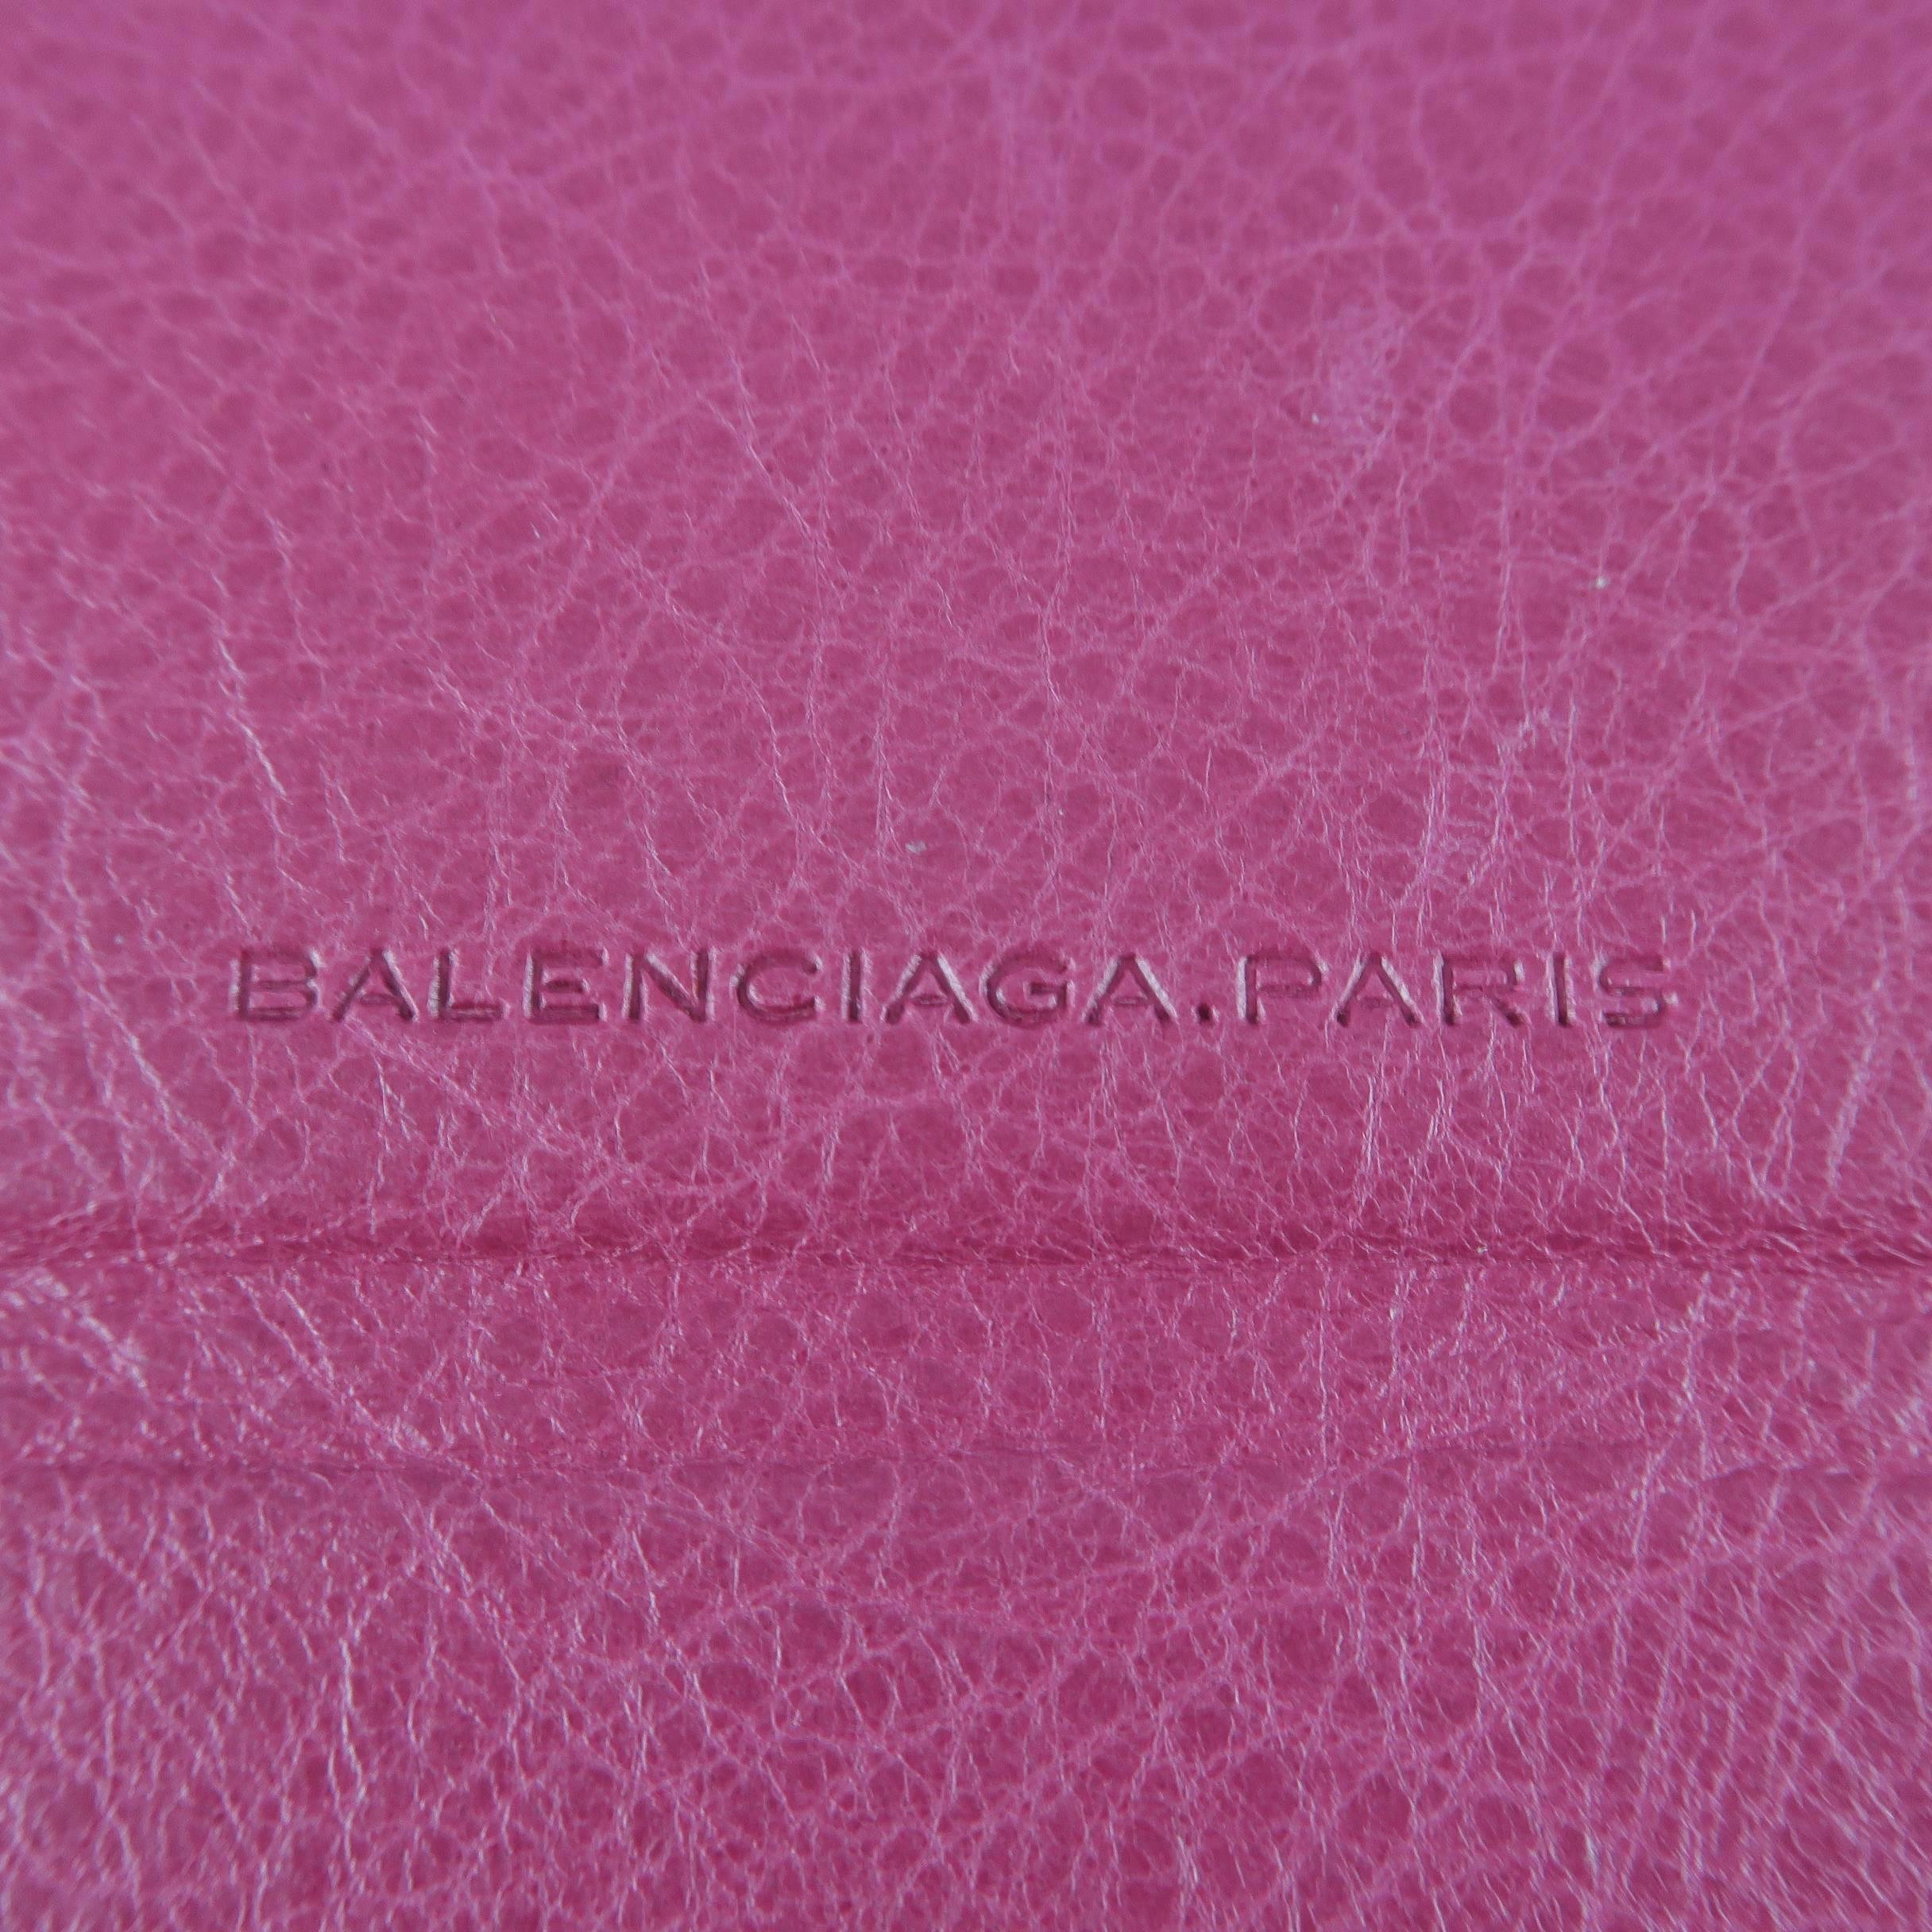 BALENCIAGA Dark Fuchsia Pink Textured Leather Moto Ipad 2 Stand Case 3